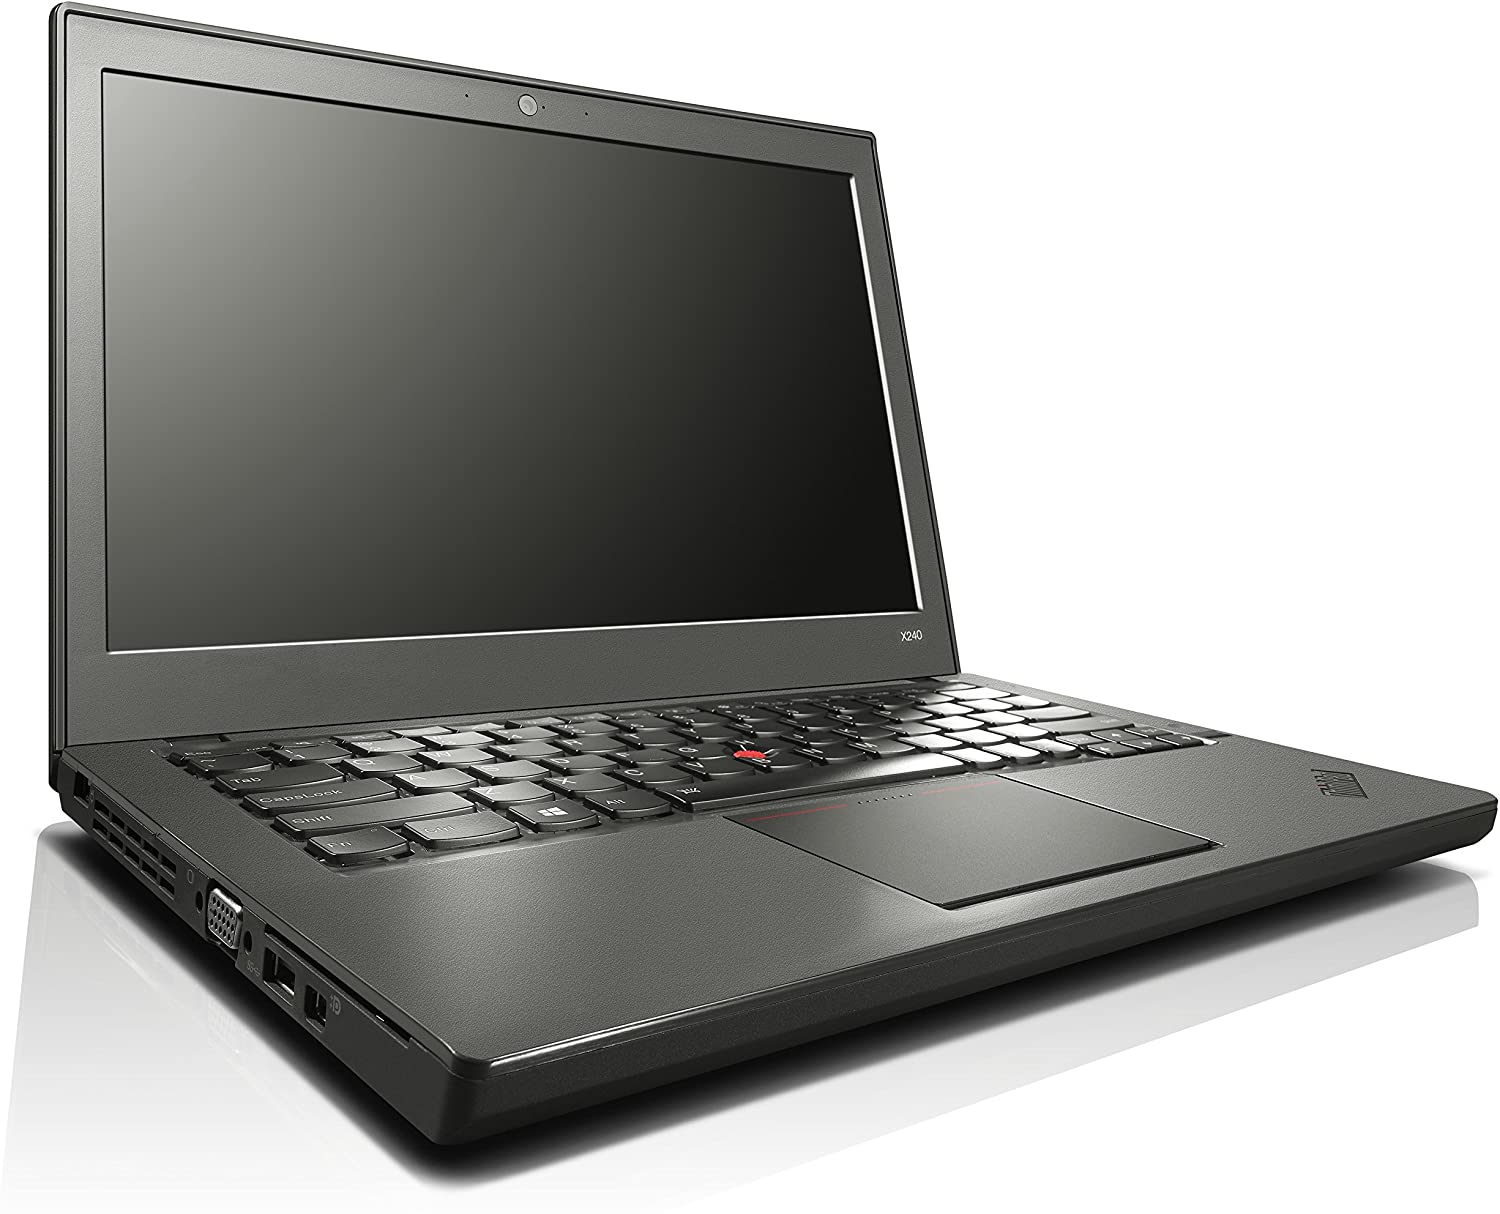 Copy of Lenovo Thinkpad X250 i5 5500u 2.2GHz 8GB Ram 256GB SSD Windows 10 Pro. Refurbrished - Atlas Computers & Electronics 